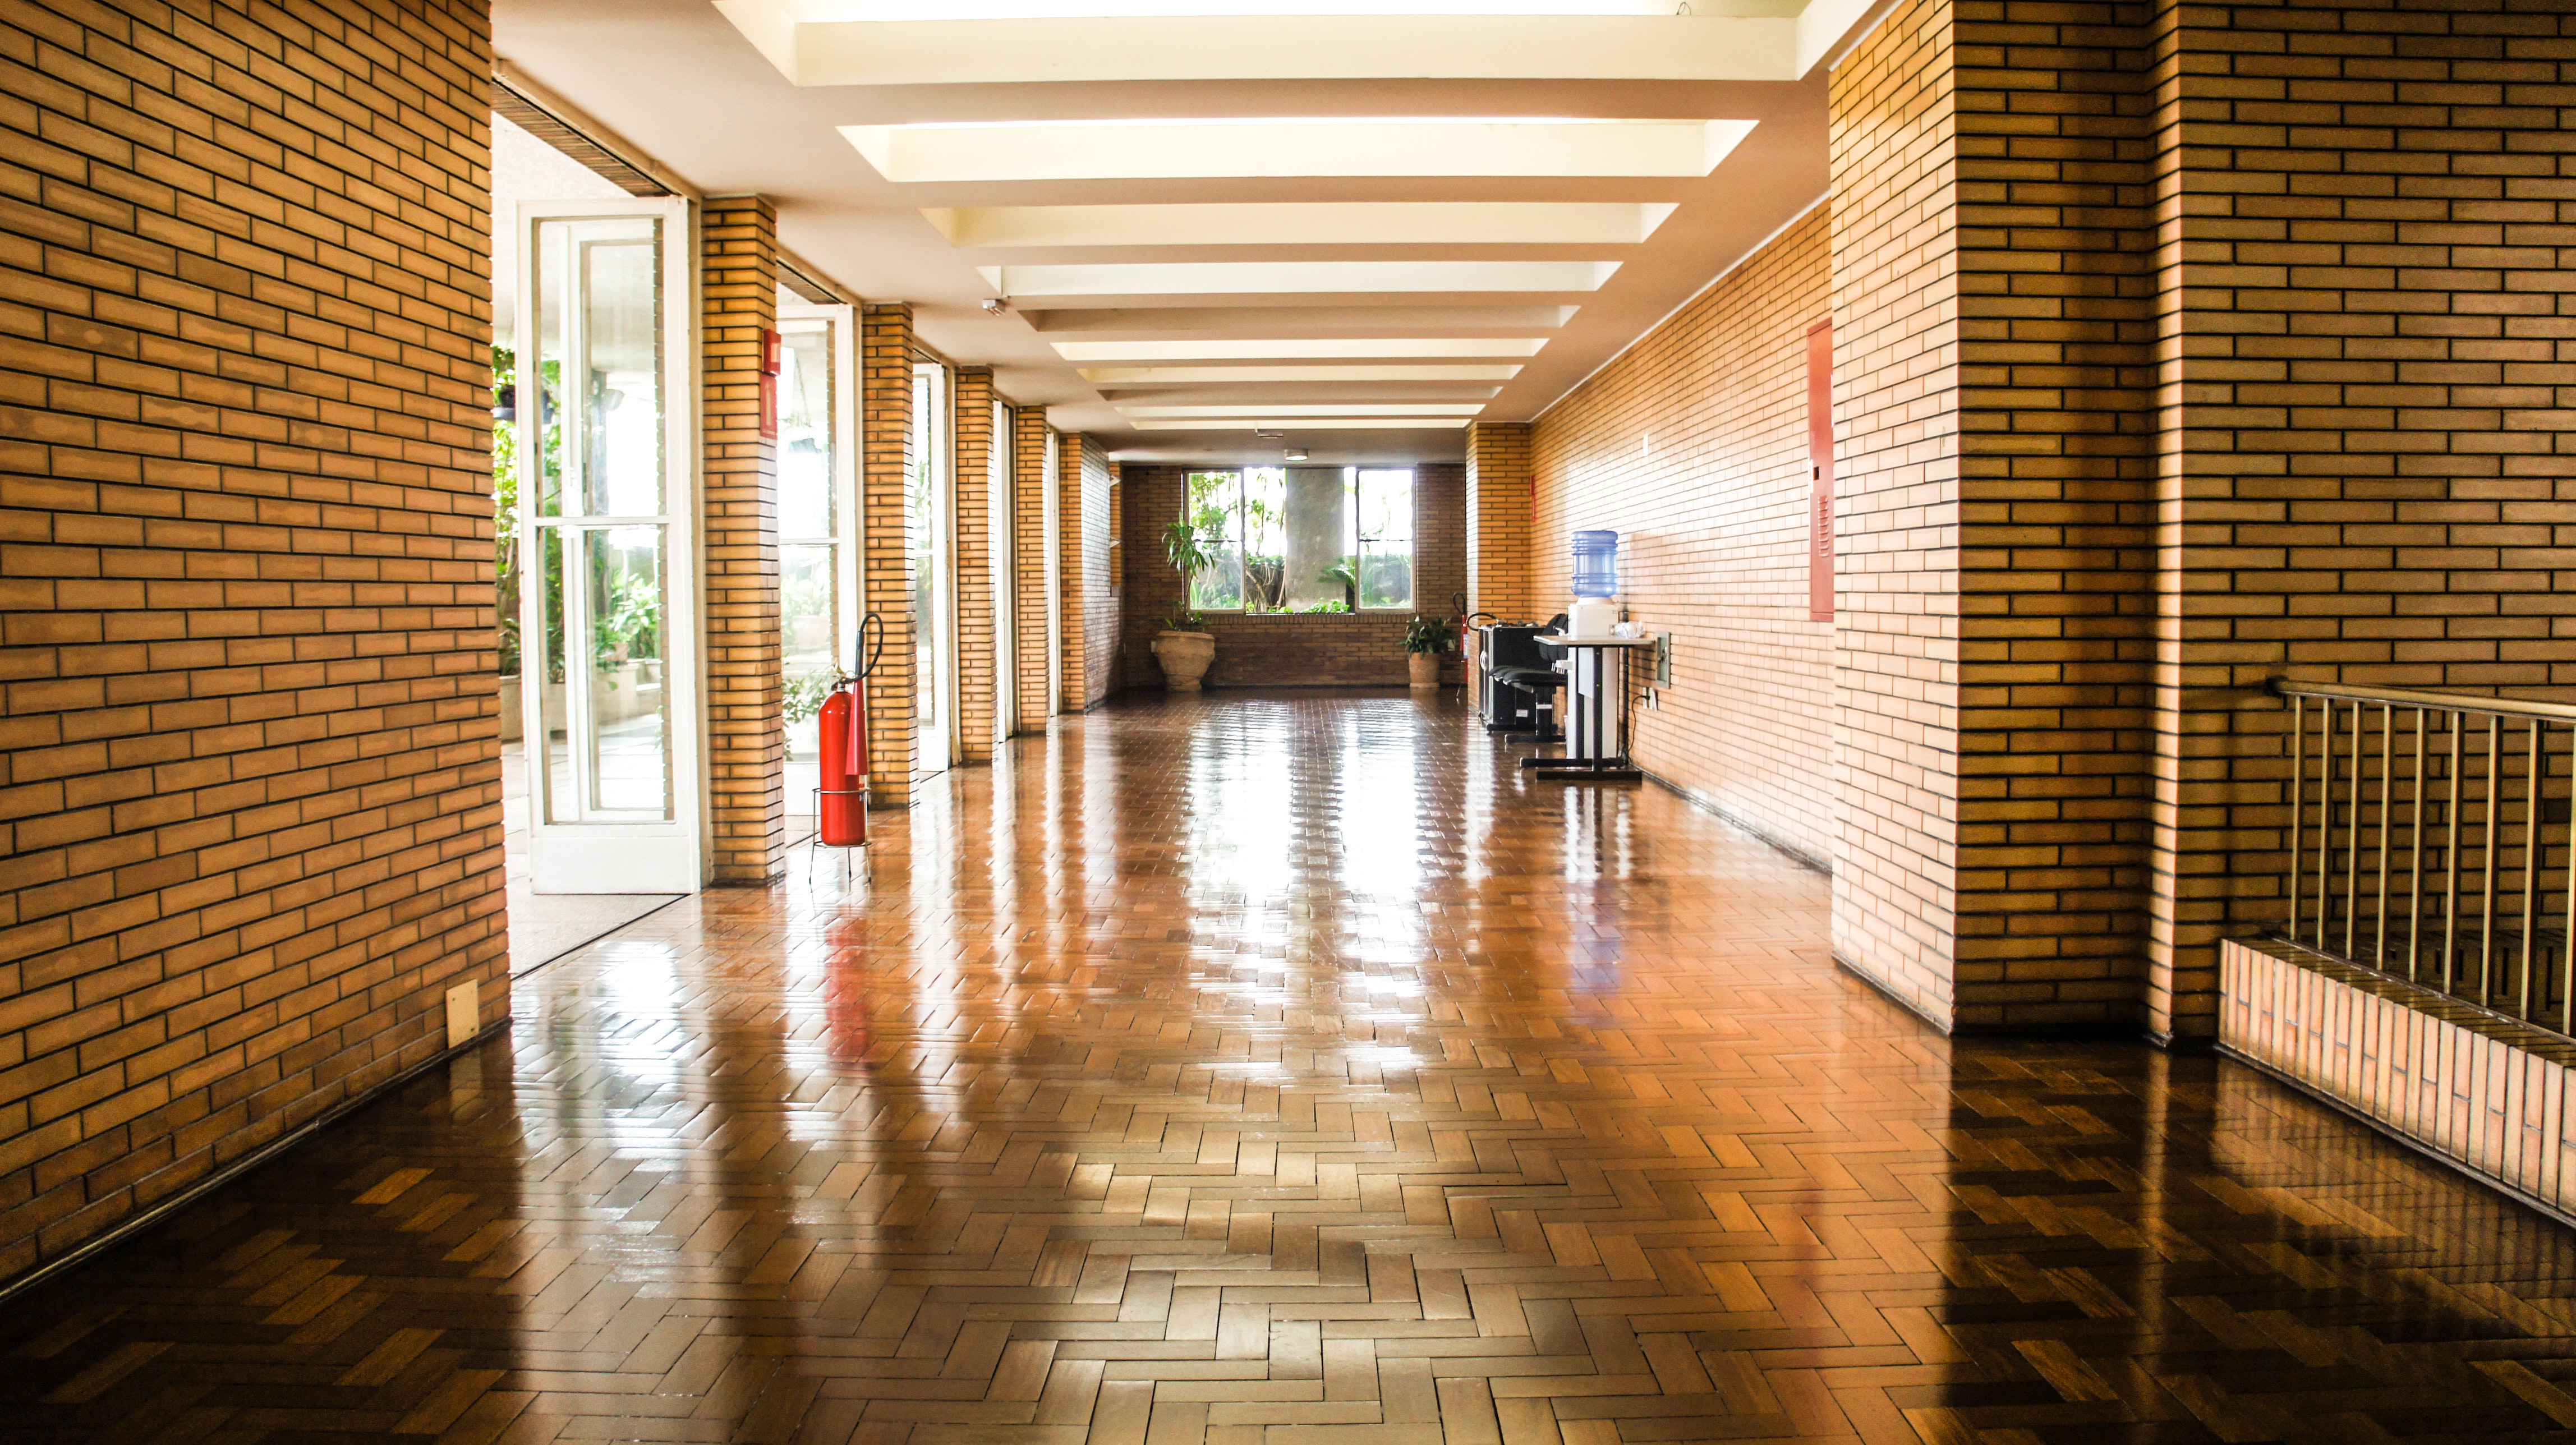 Brown Wooden Flooring Hallway, Architecture, Window, Shiny, Plants, HQ Photo